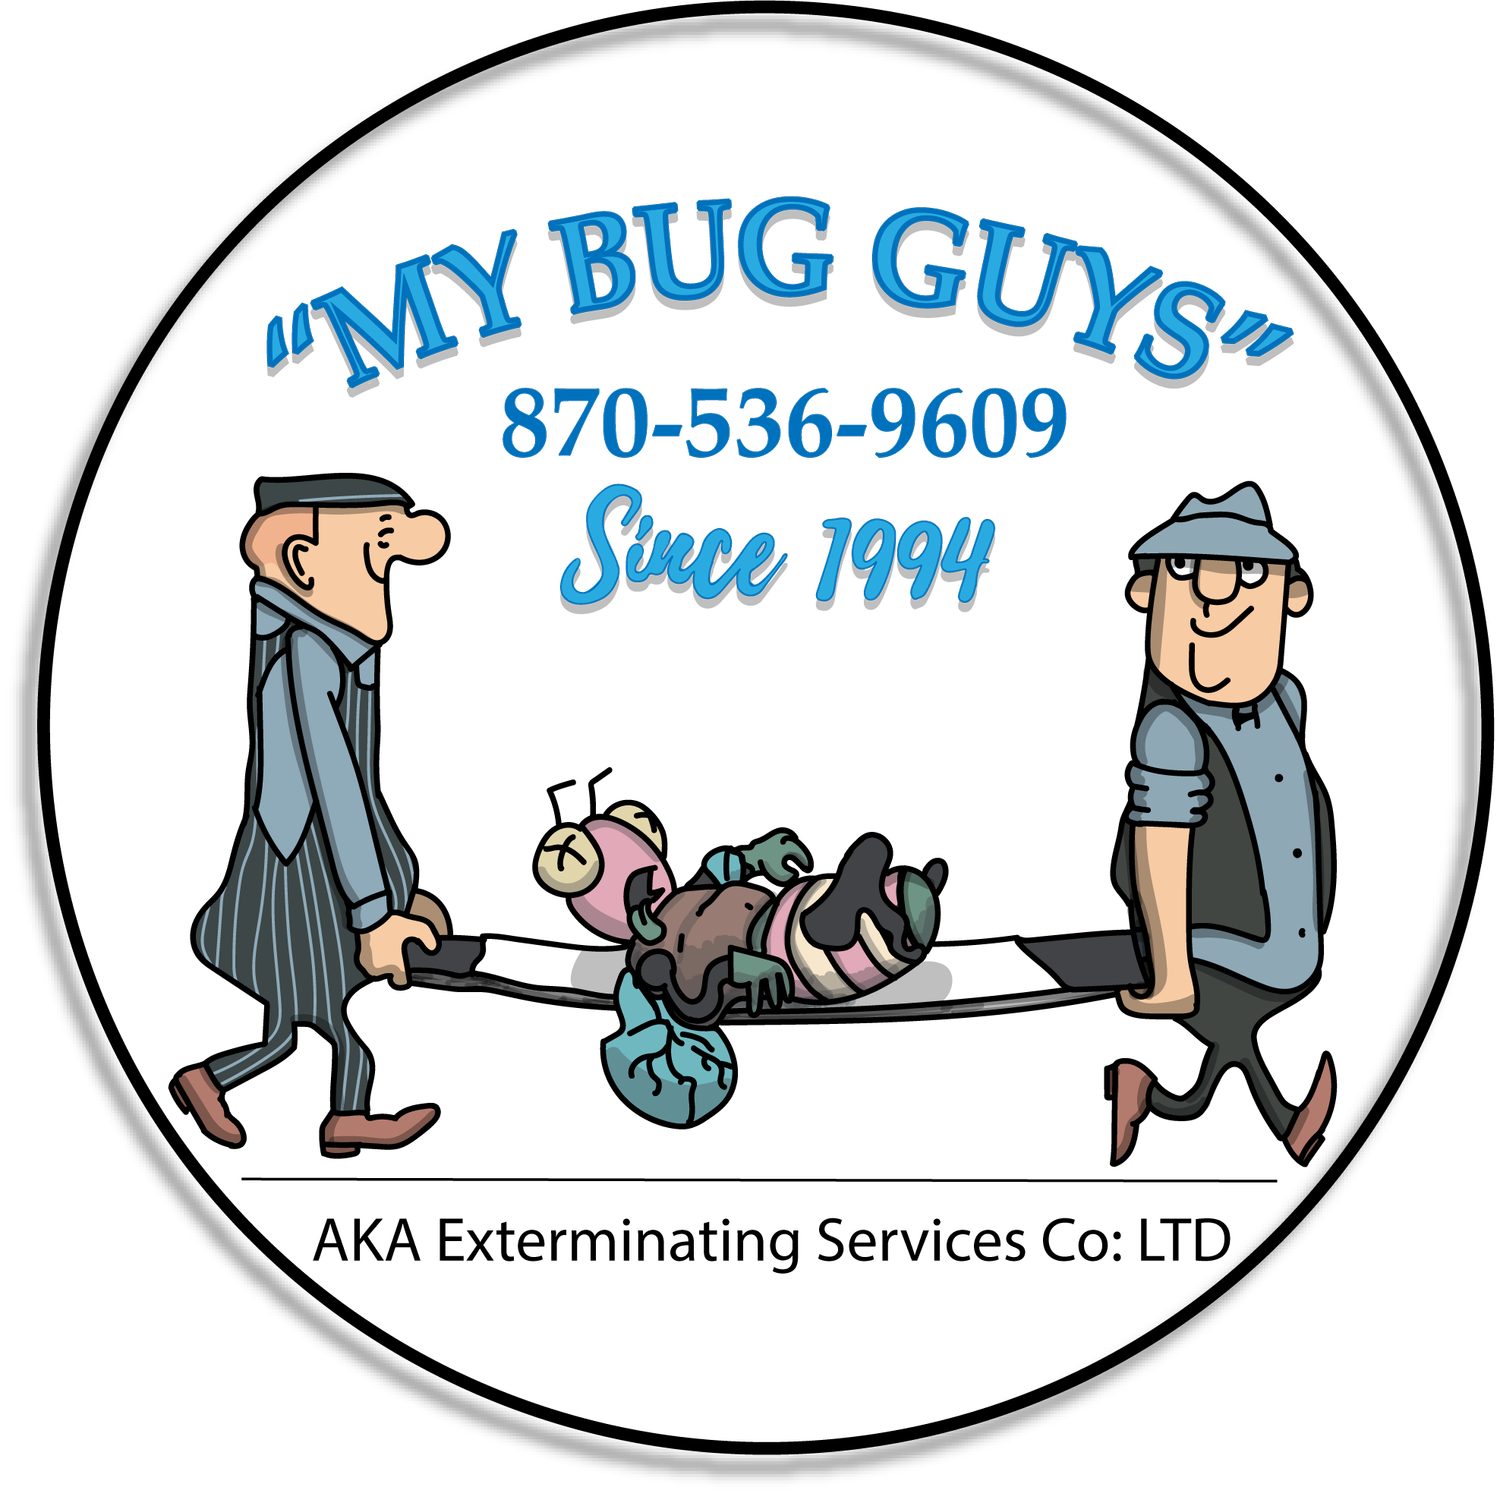 My Bug Guys